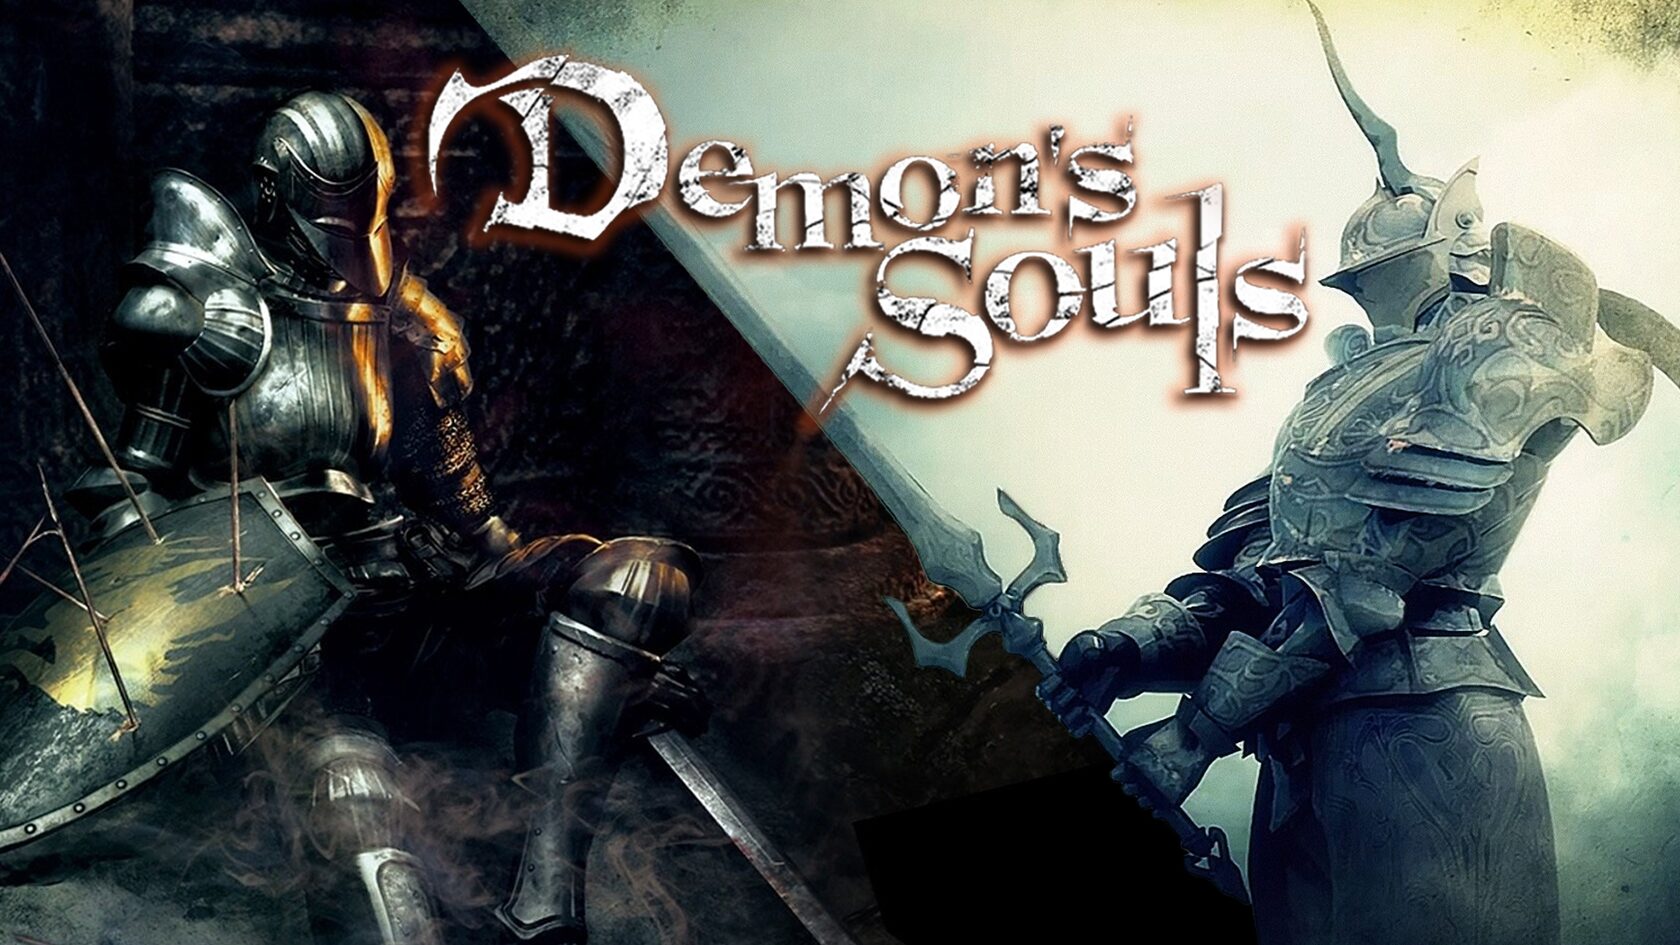 Demons souls 2009. Demon Souls диск ps3. Демон соулс пс5. Демон соулс ремейк обложка. Demon's Souls ps3 Cover.